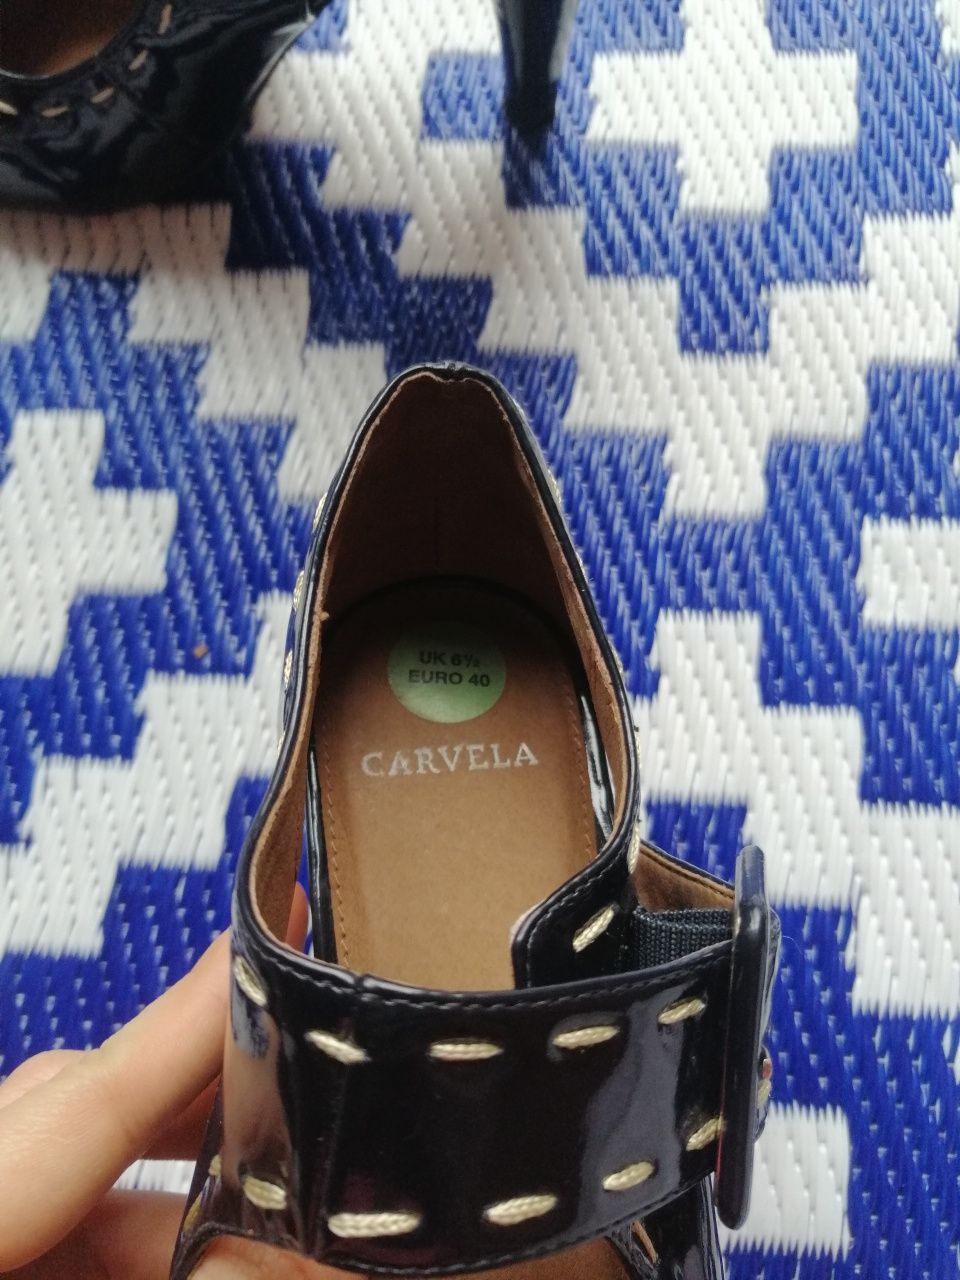 Carvela 40 buty na Sylwestra tkmaxx